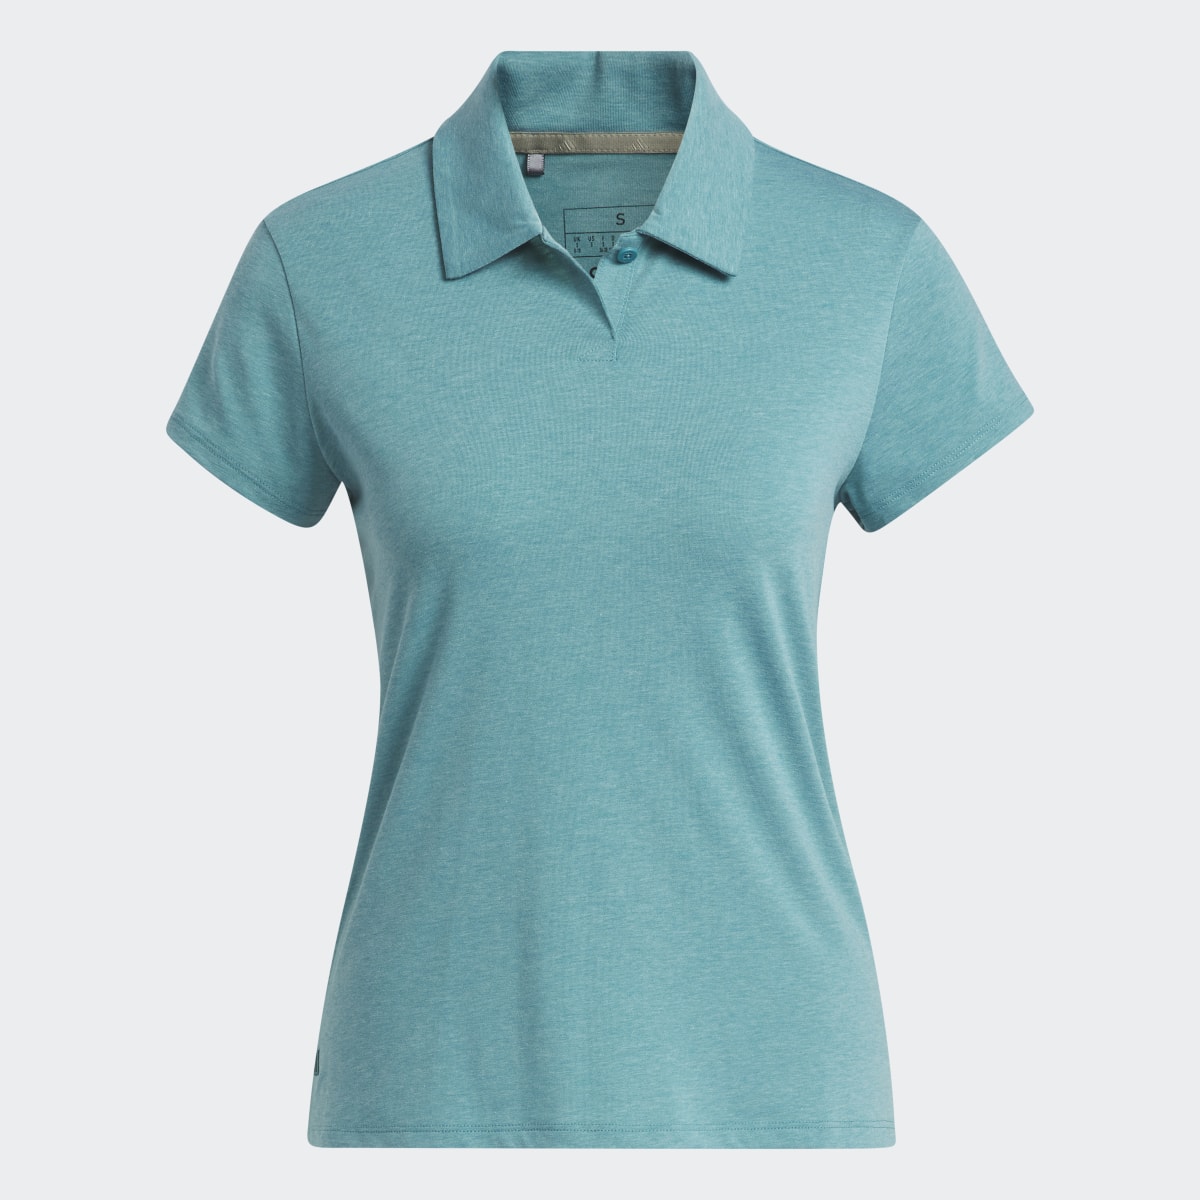 Adidas Go-To Heathered Polo Shirt. 6